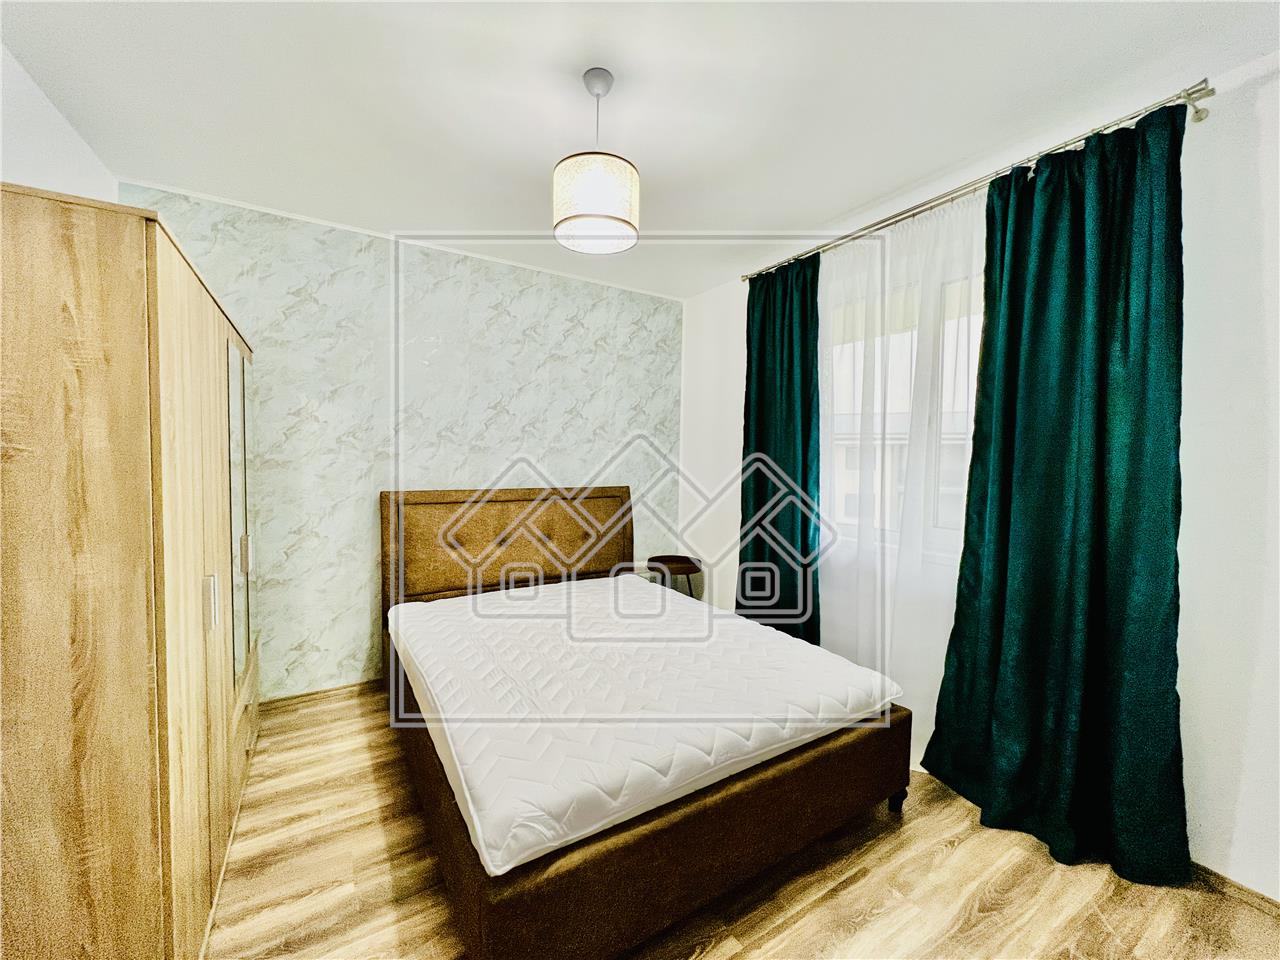 Apartament de inchiriat in Sibiu-NOU 3 camere, 2 balcoane, loc parcare